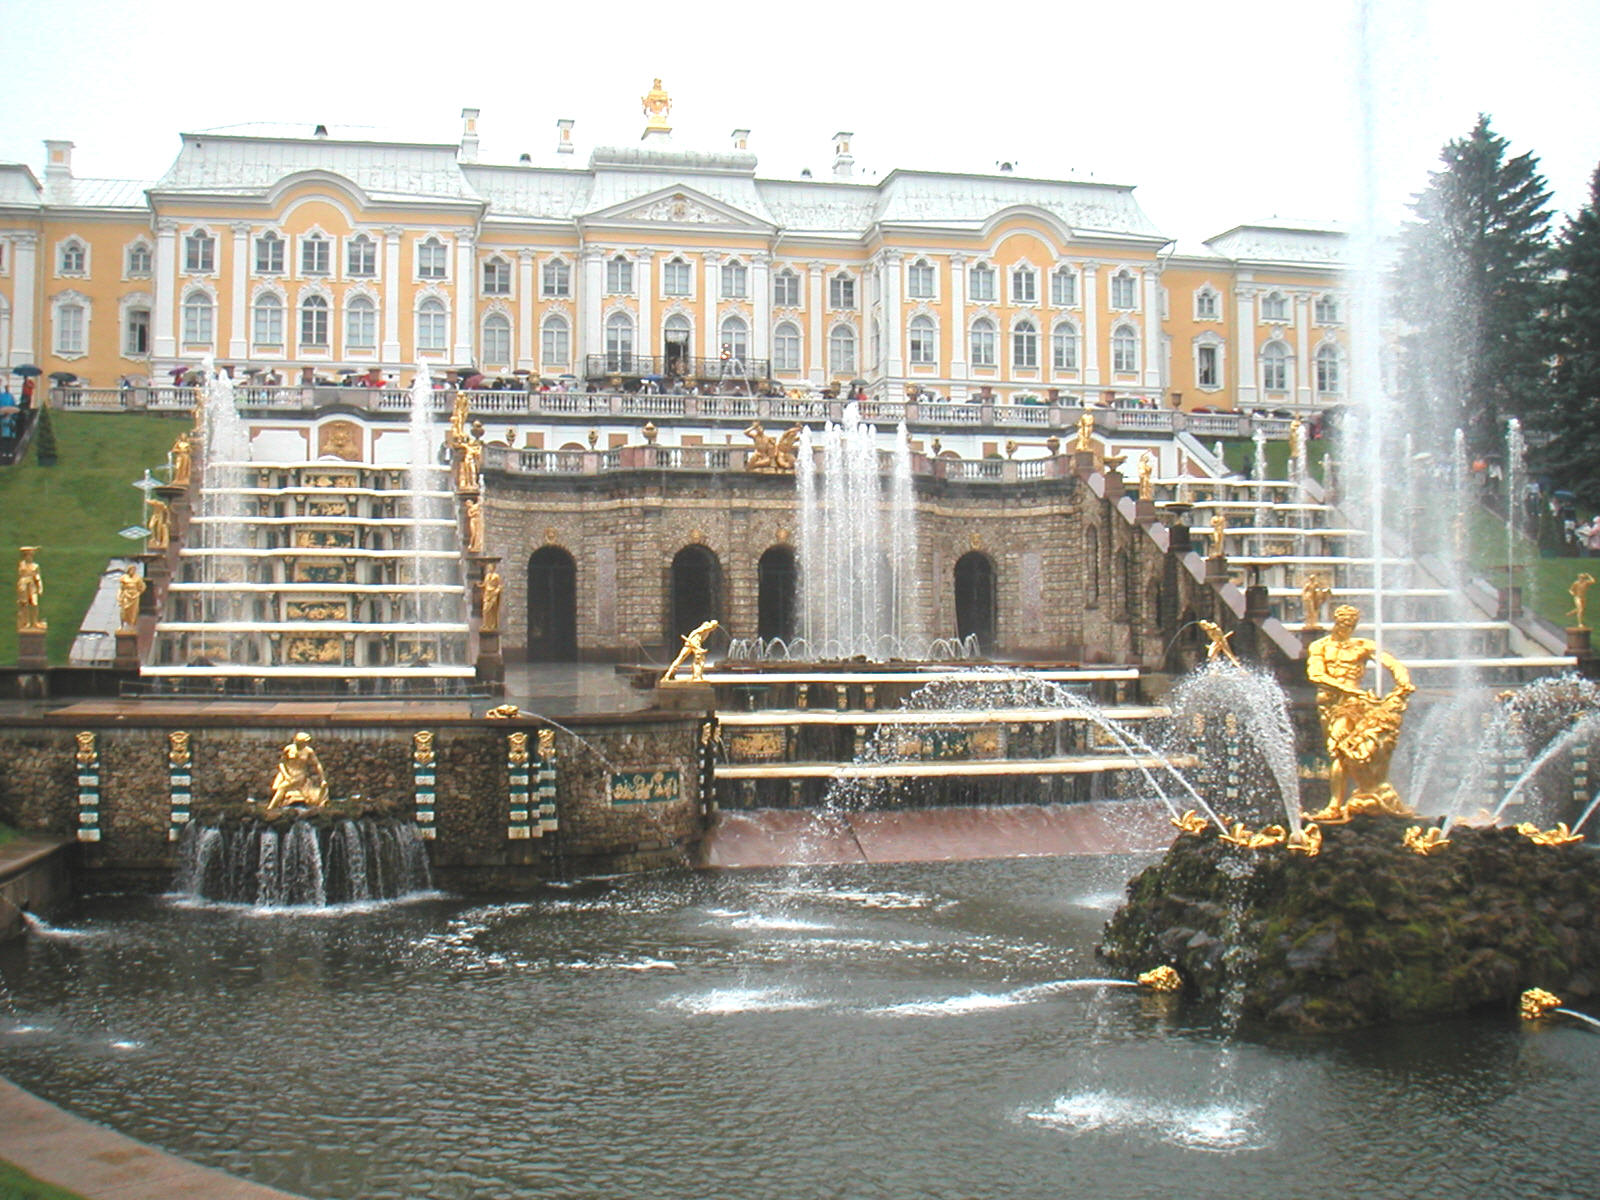 File:St.Petersburg Peterhof fountains.jpg - Wikimedia Commons